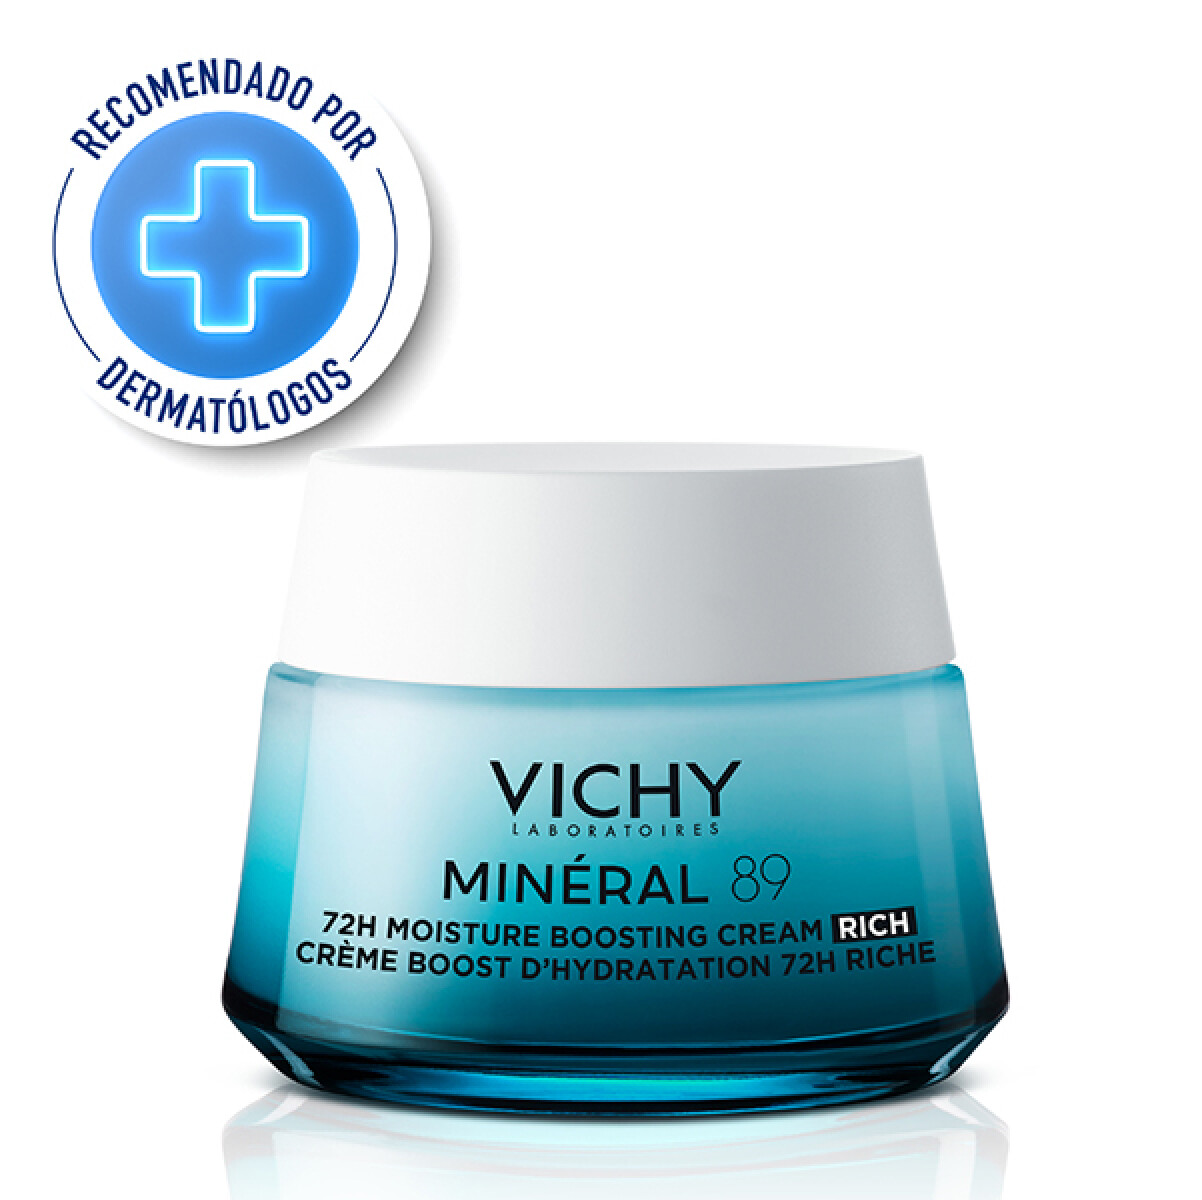 Crema Vichy boost hidratacion mineral 89 - Textura rica 